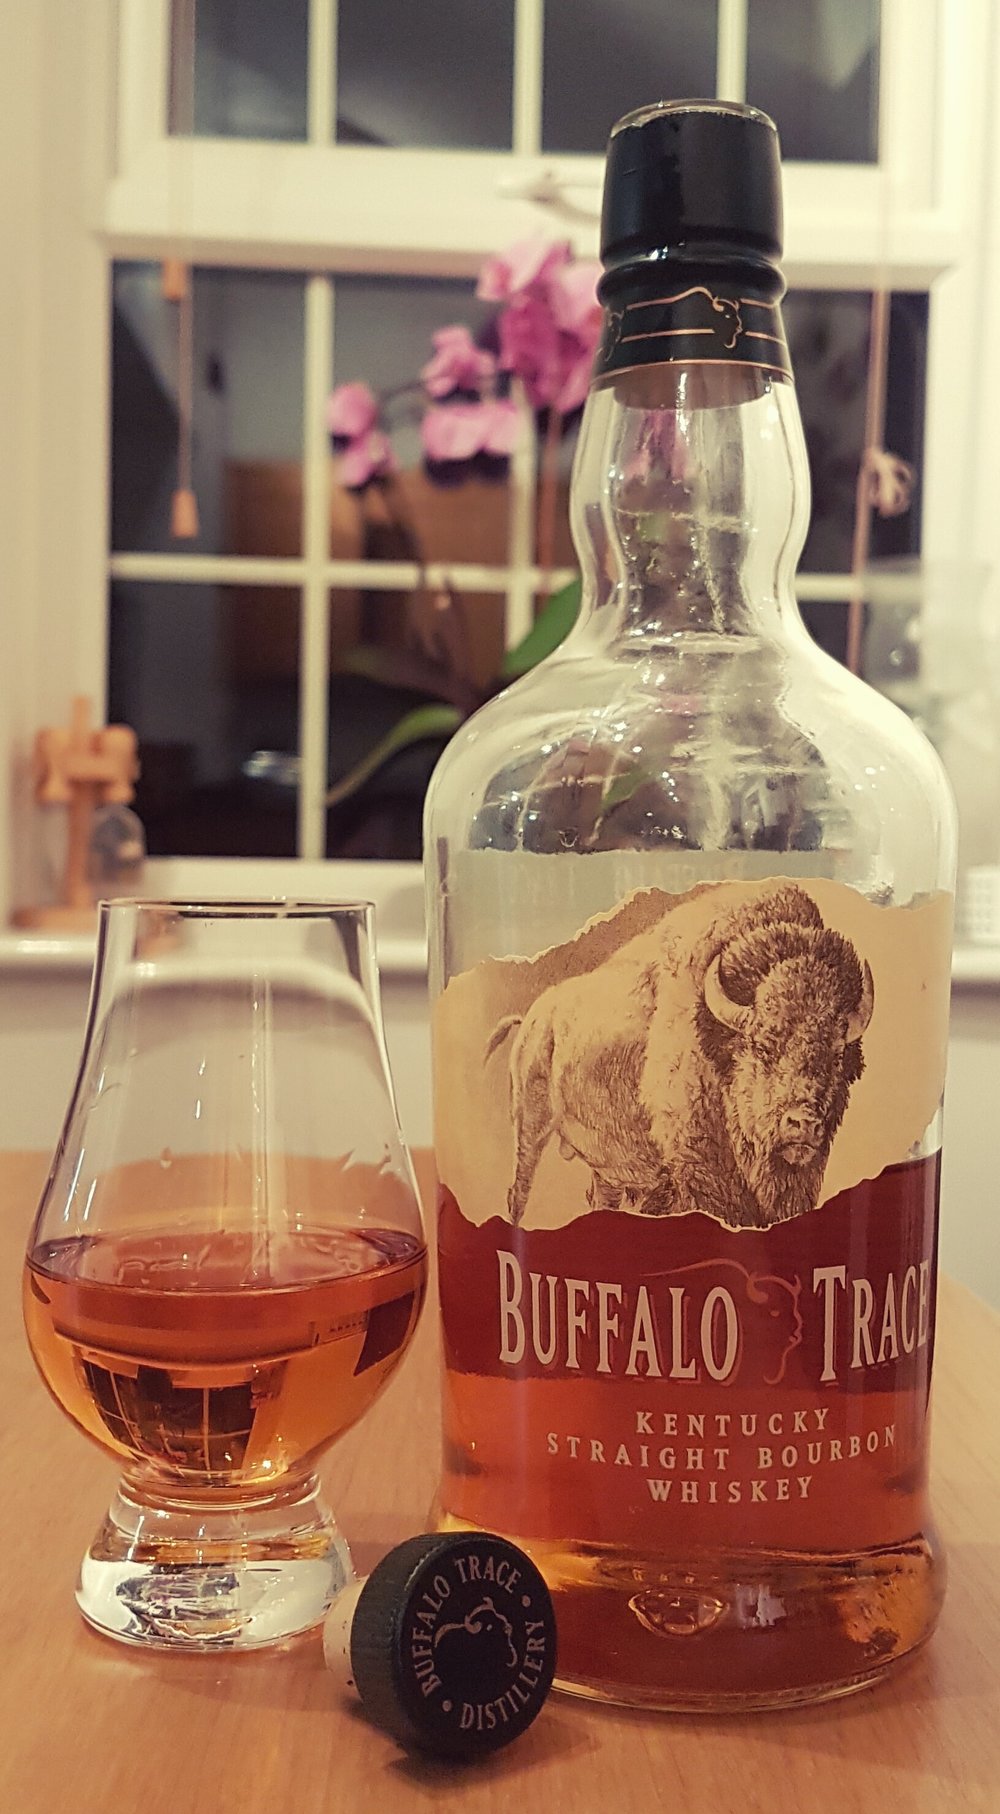 The Buffalo Trace — Bourbon